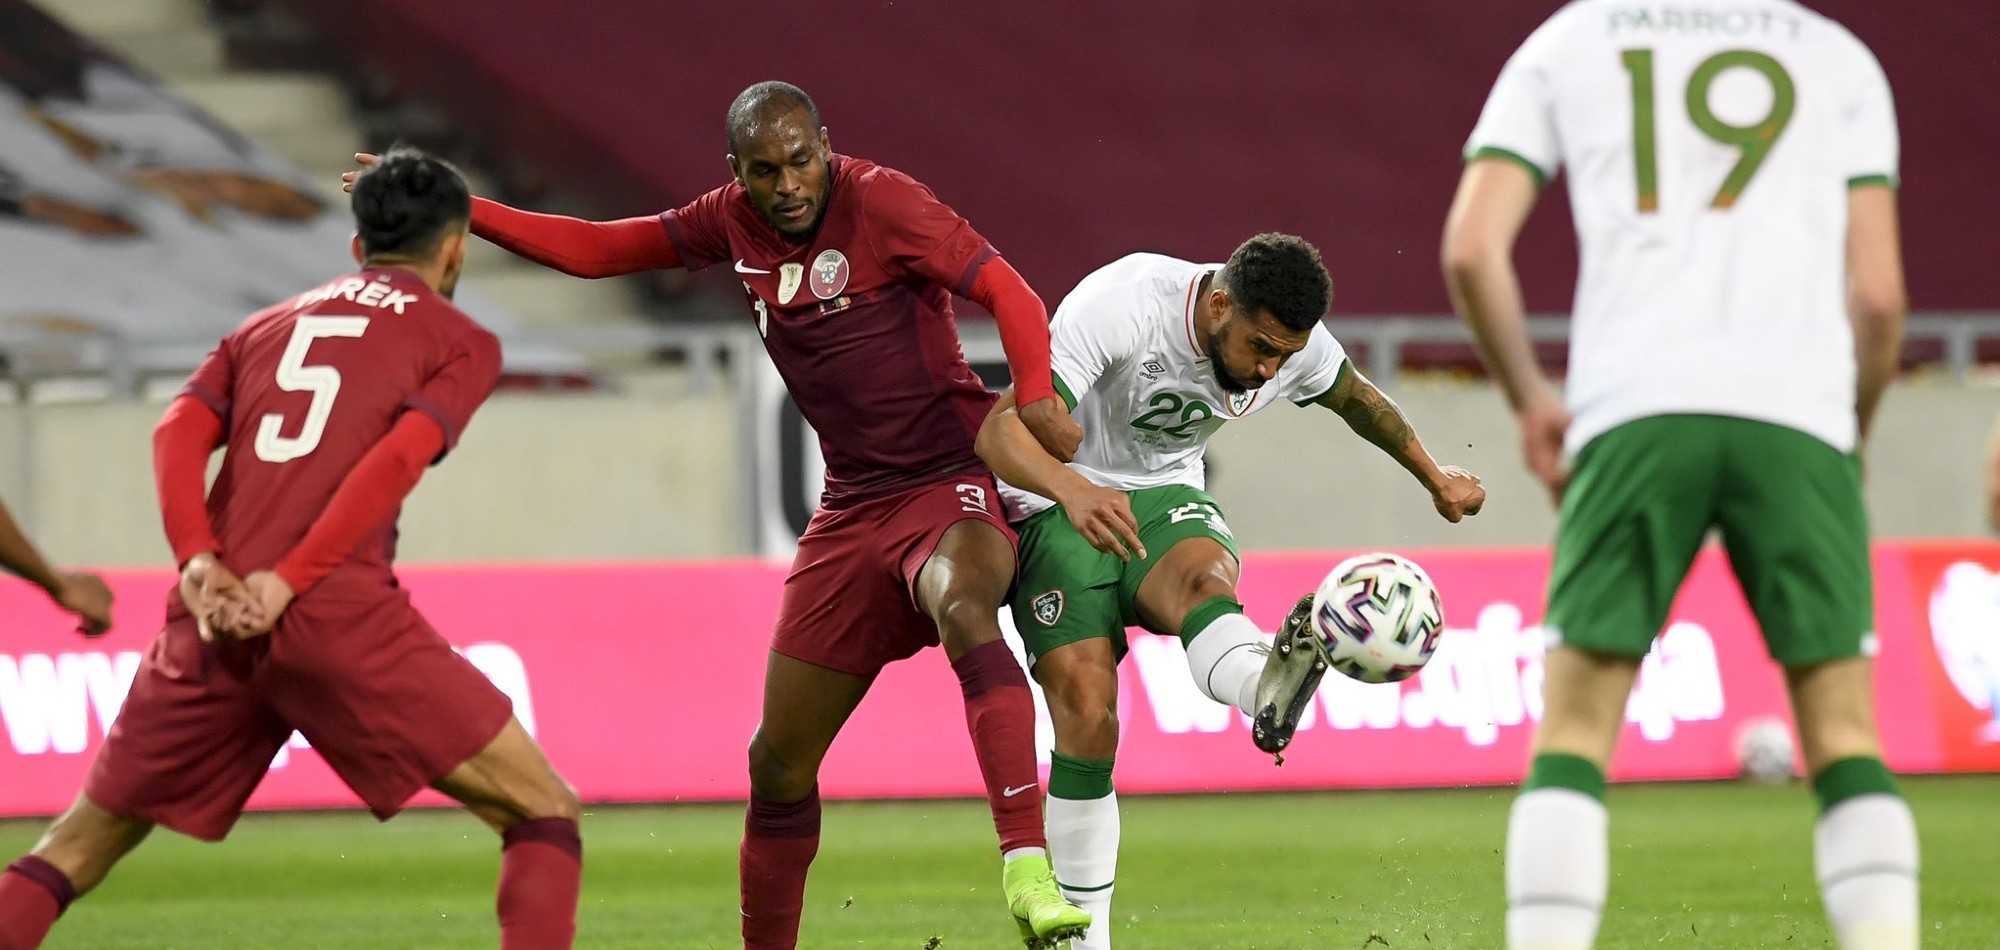 Muntari brings Qatar level with Ireland to continue side